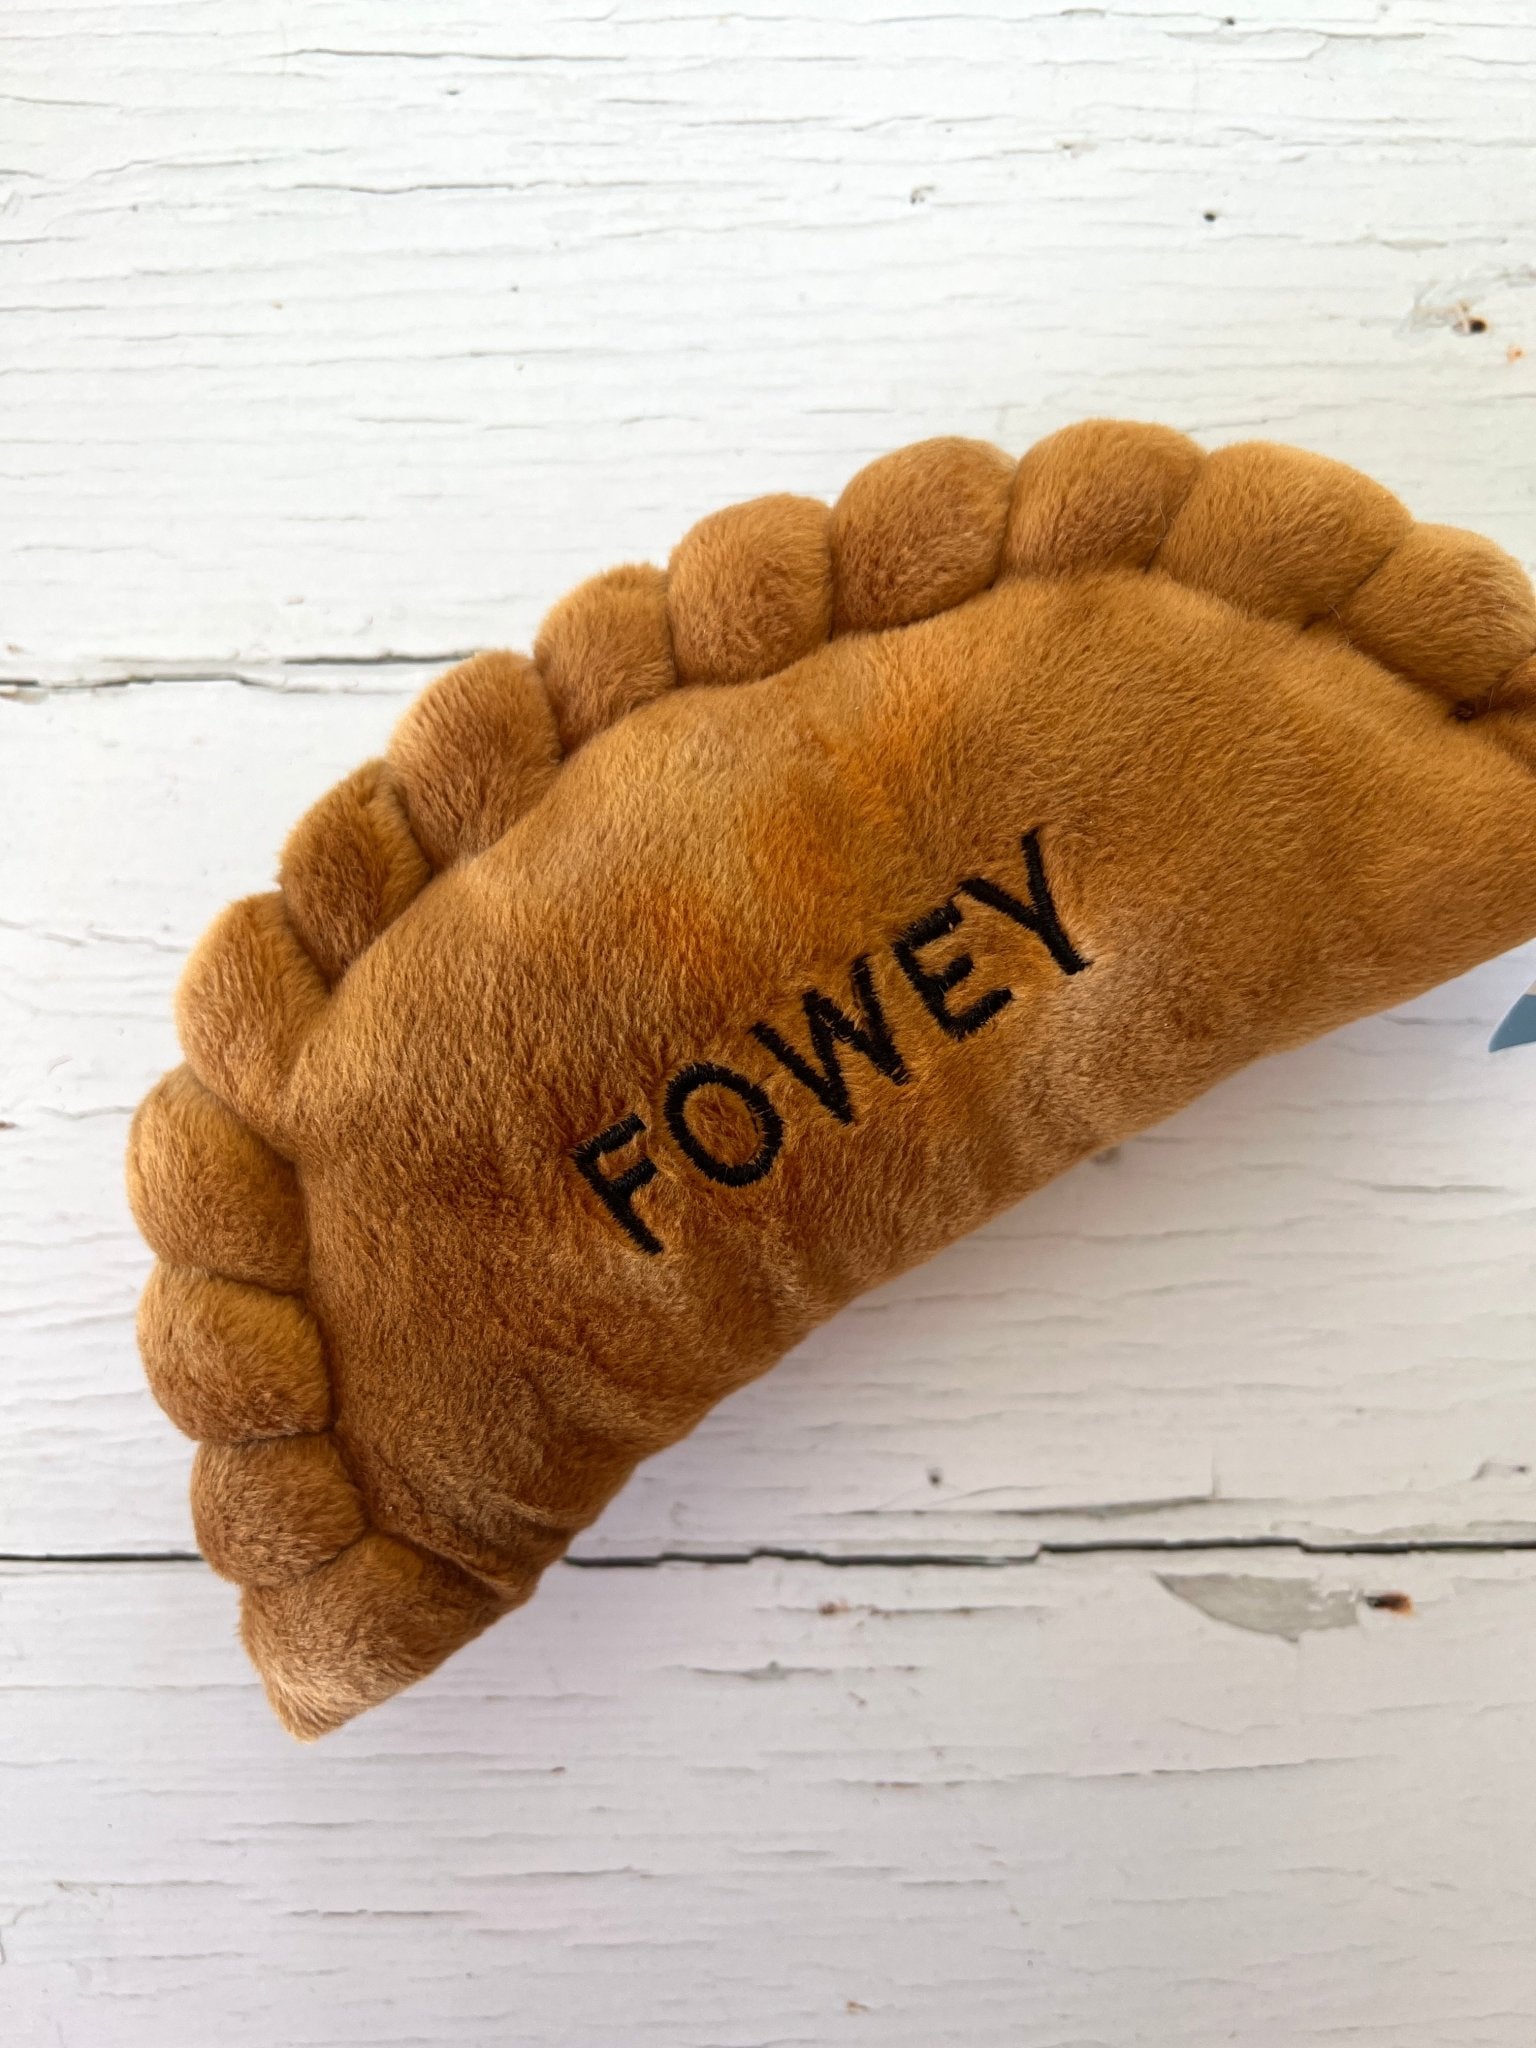 Cuddly Fowey Pasty Soft Toy - Readymoney Beach Shop